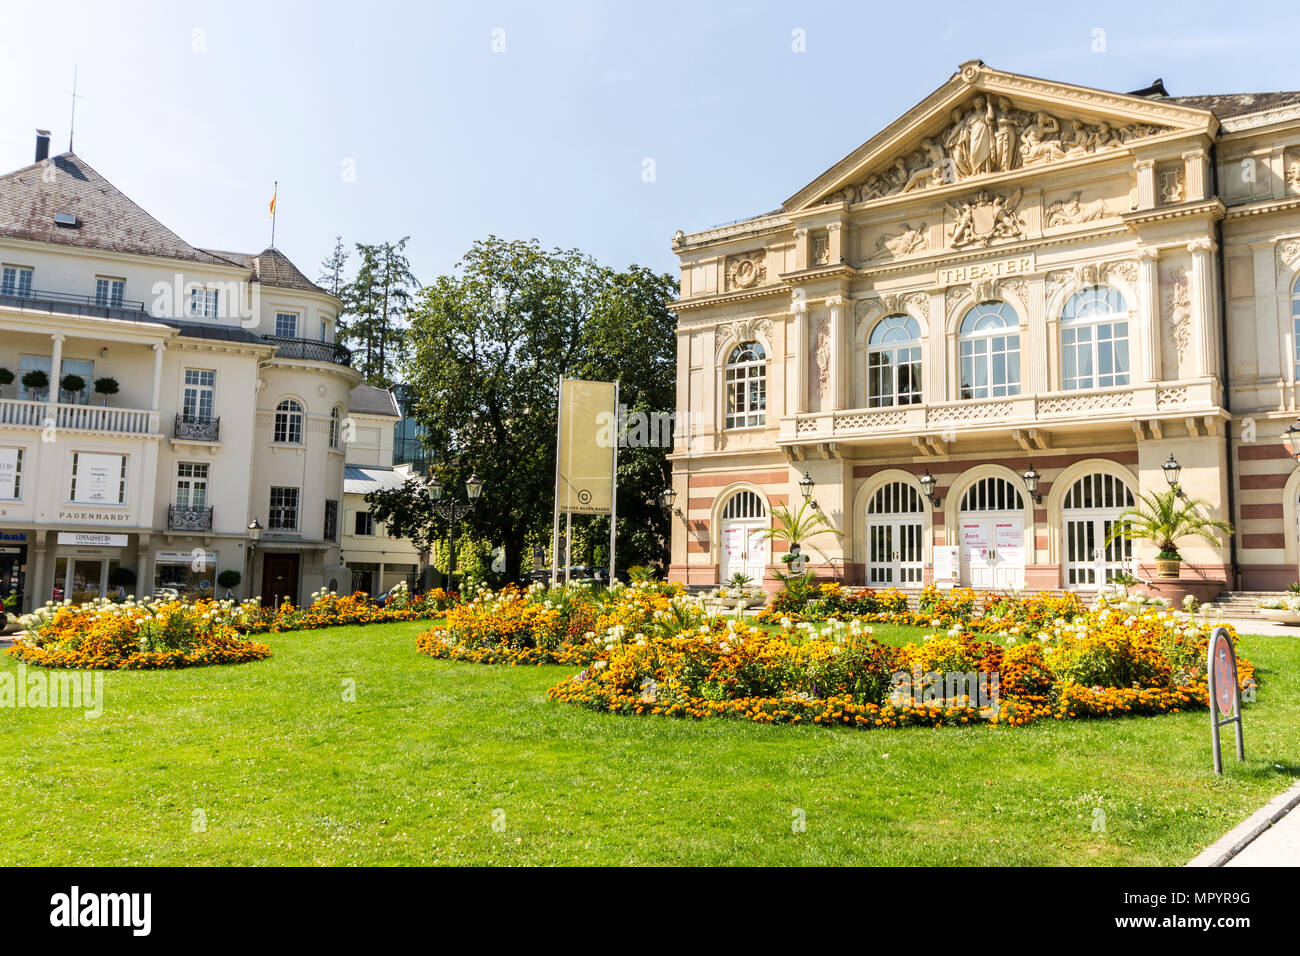 Baden-Baden, Allemagne. Le théâtre Baden-Baden, sur la place Goetheplatz, construit en 1862 Banque D'Images